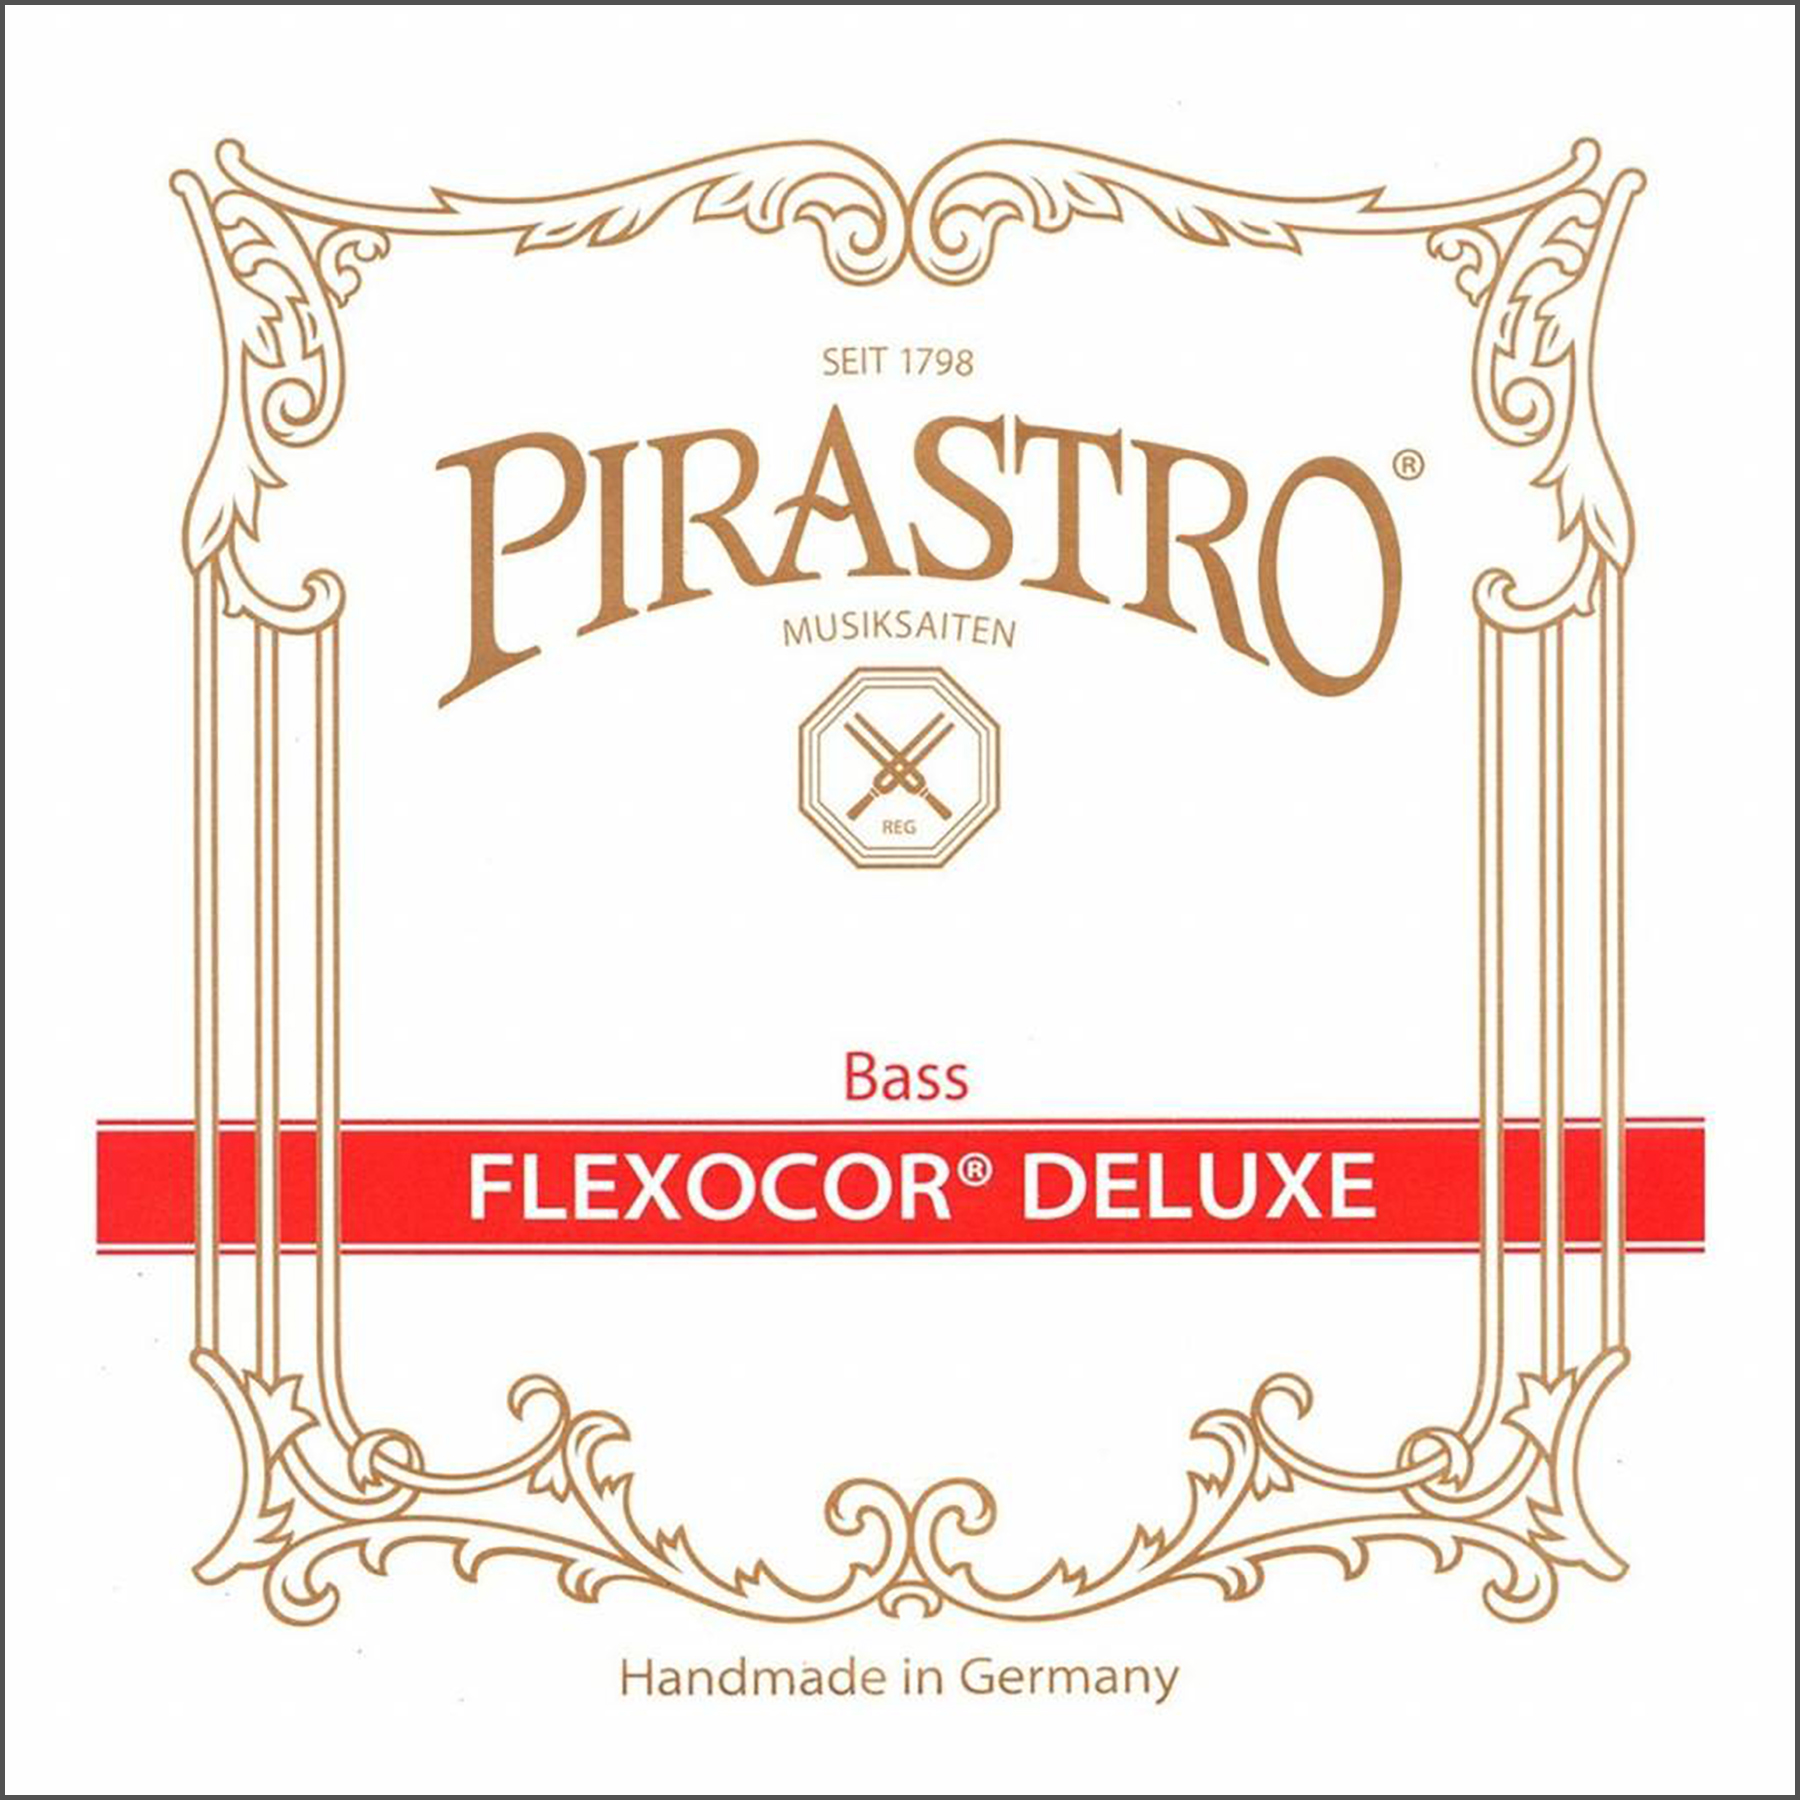 Pirastro Flexocore Deluxe Bass String Set in action